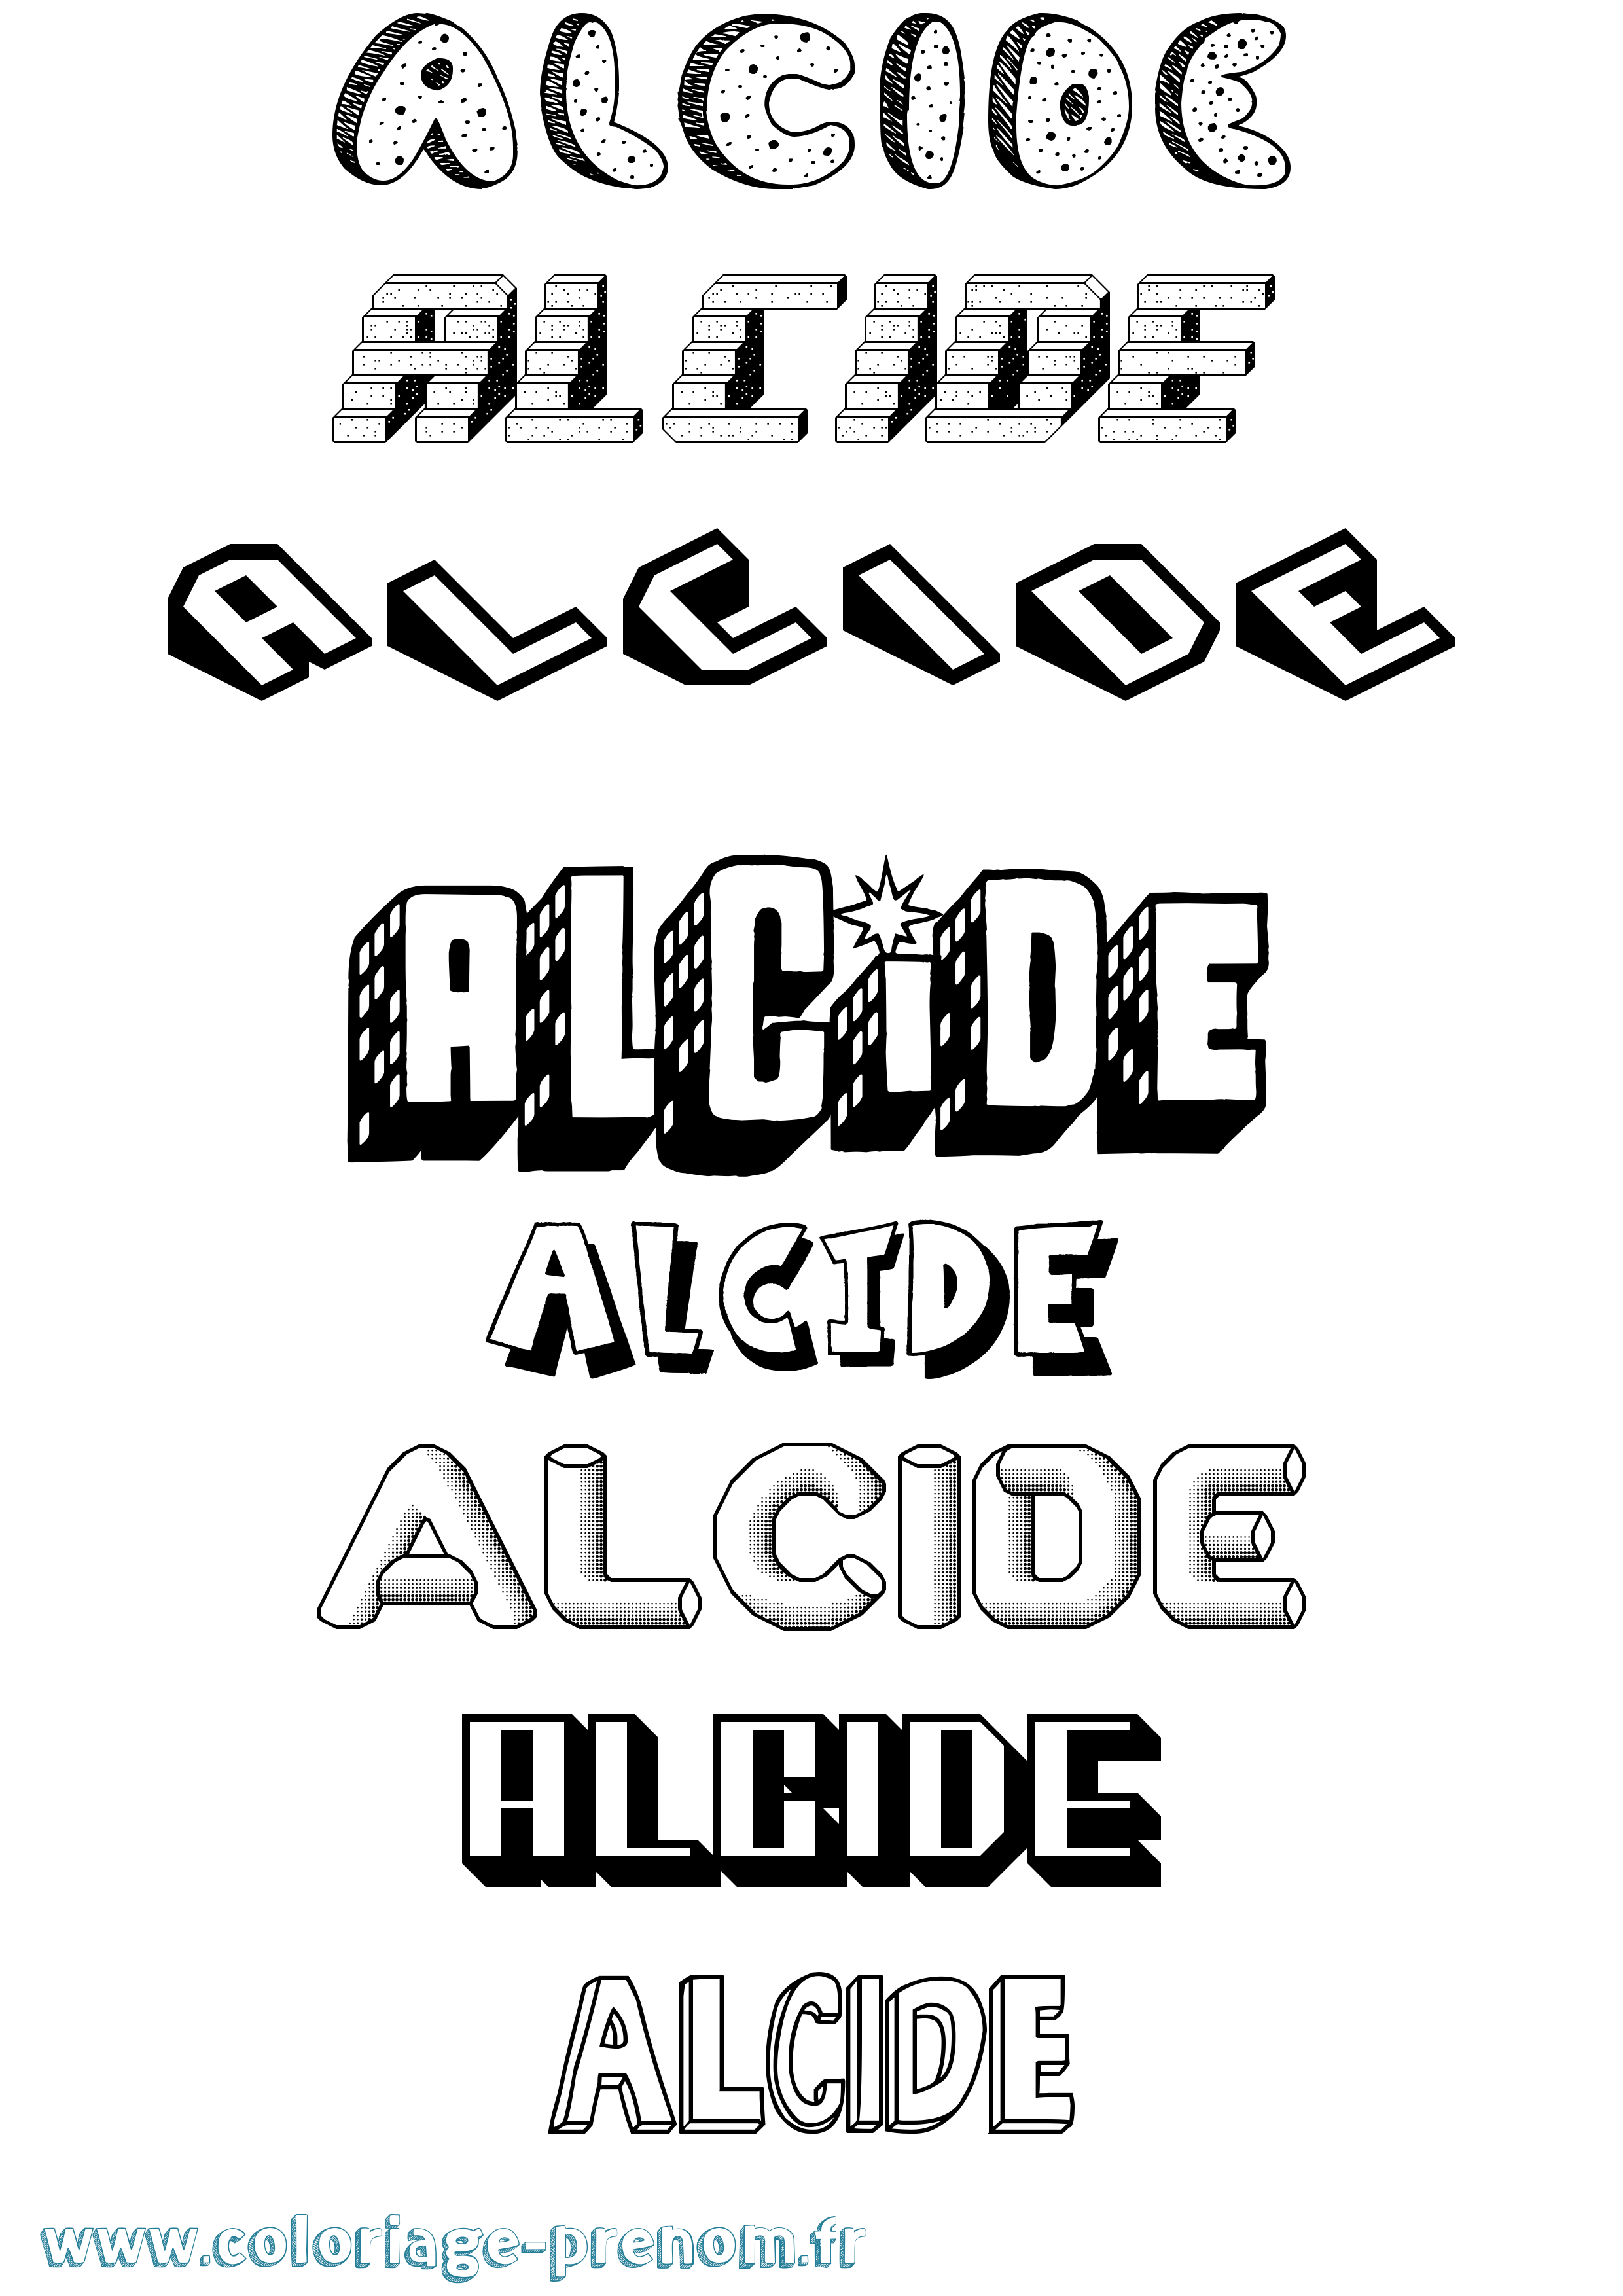 Coloriage prénom Alcide Effet 3D